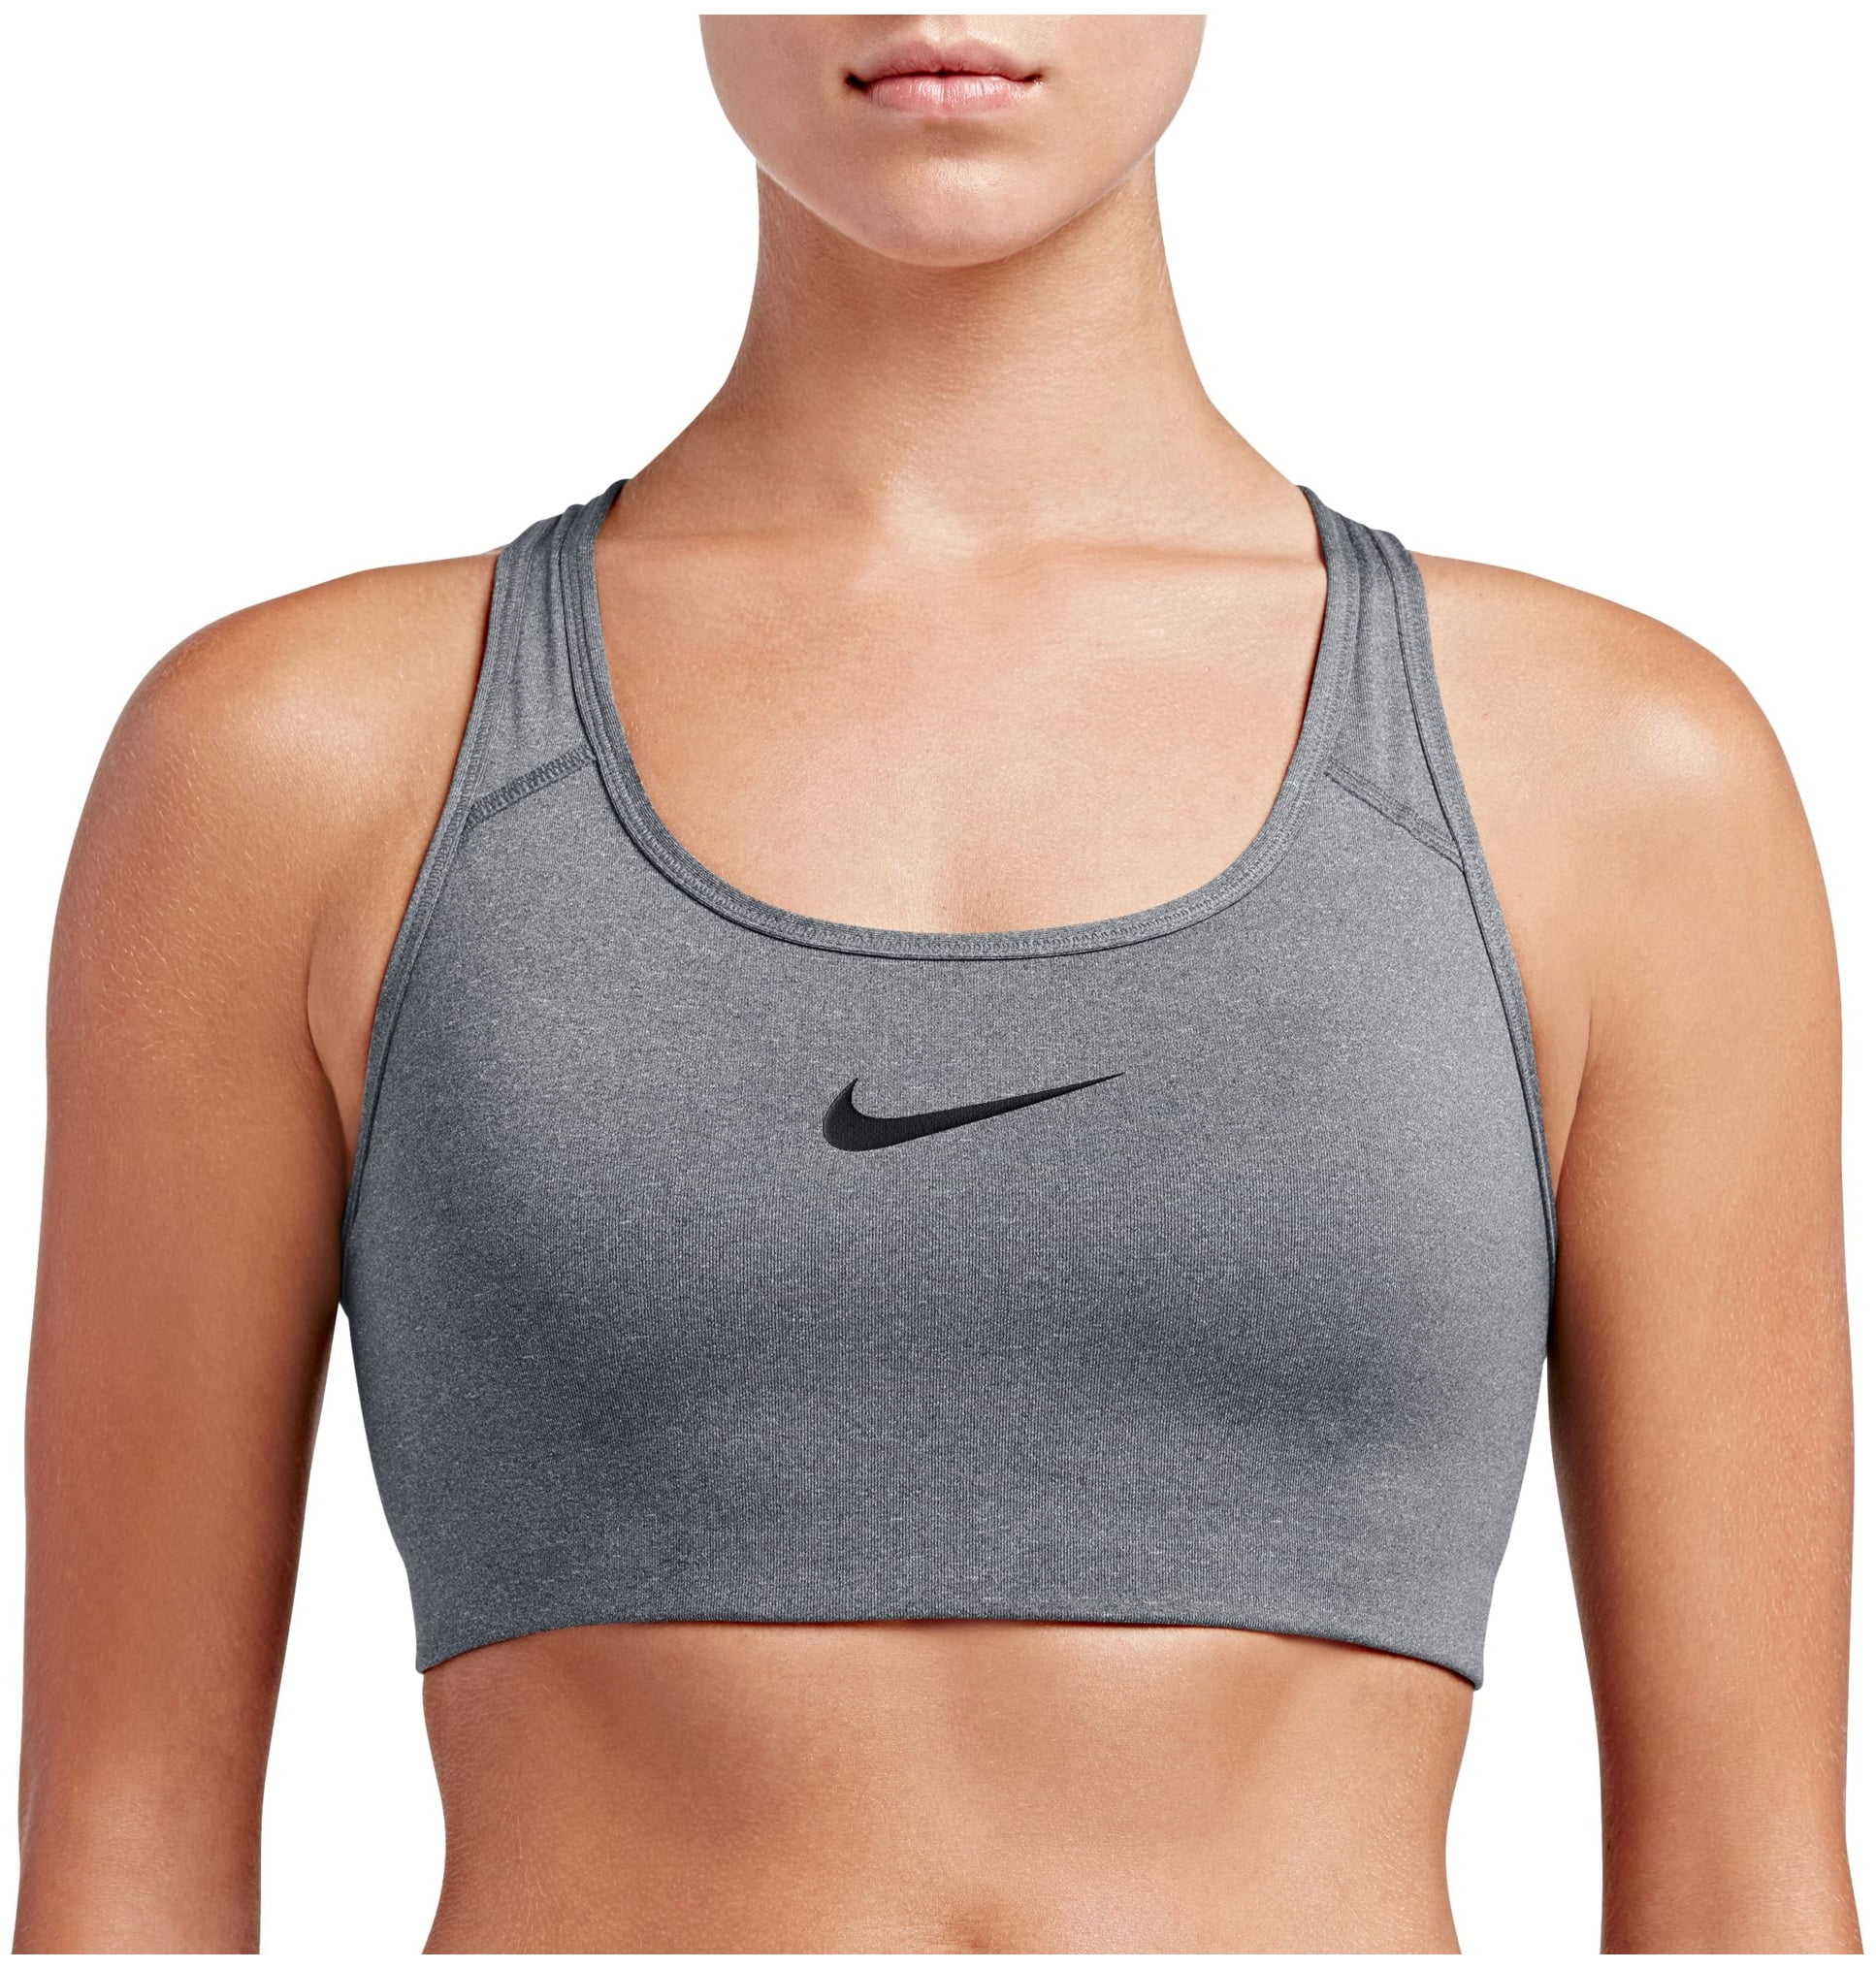 Nike Women's Pro Classic Swoosh Compression Graphic Sports Bra - Carbon  Heather/Black - Size XS 